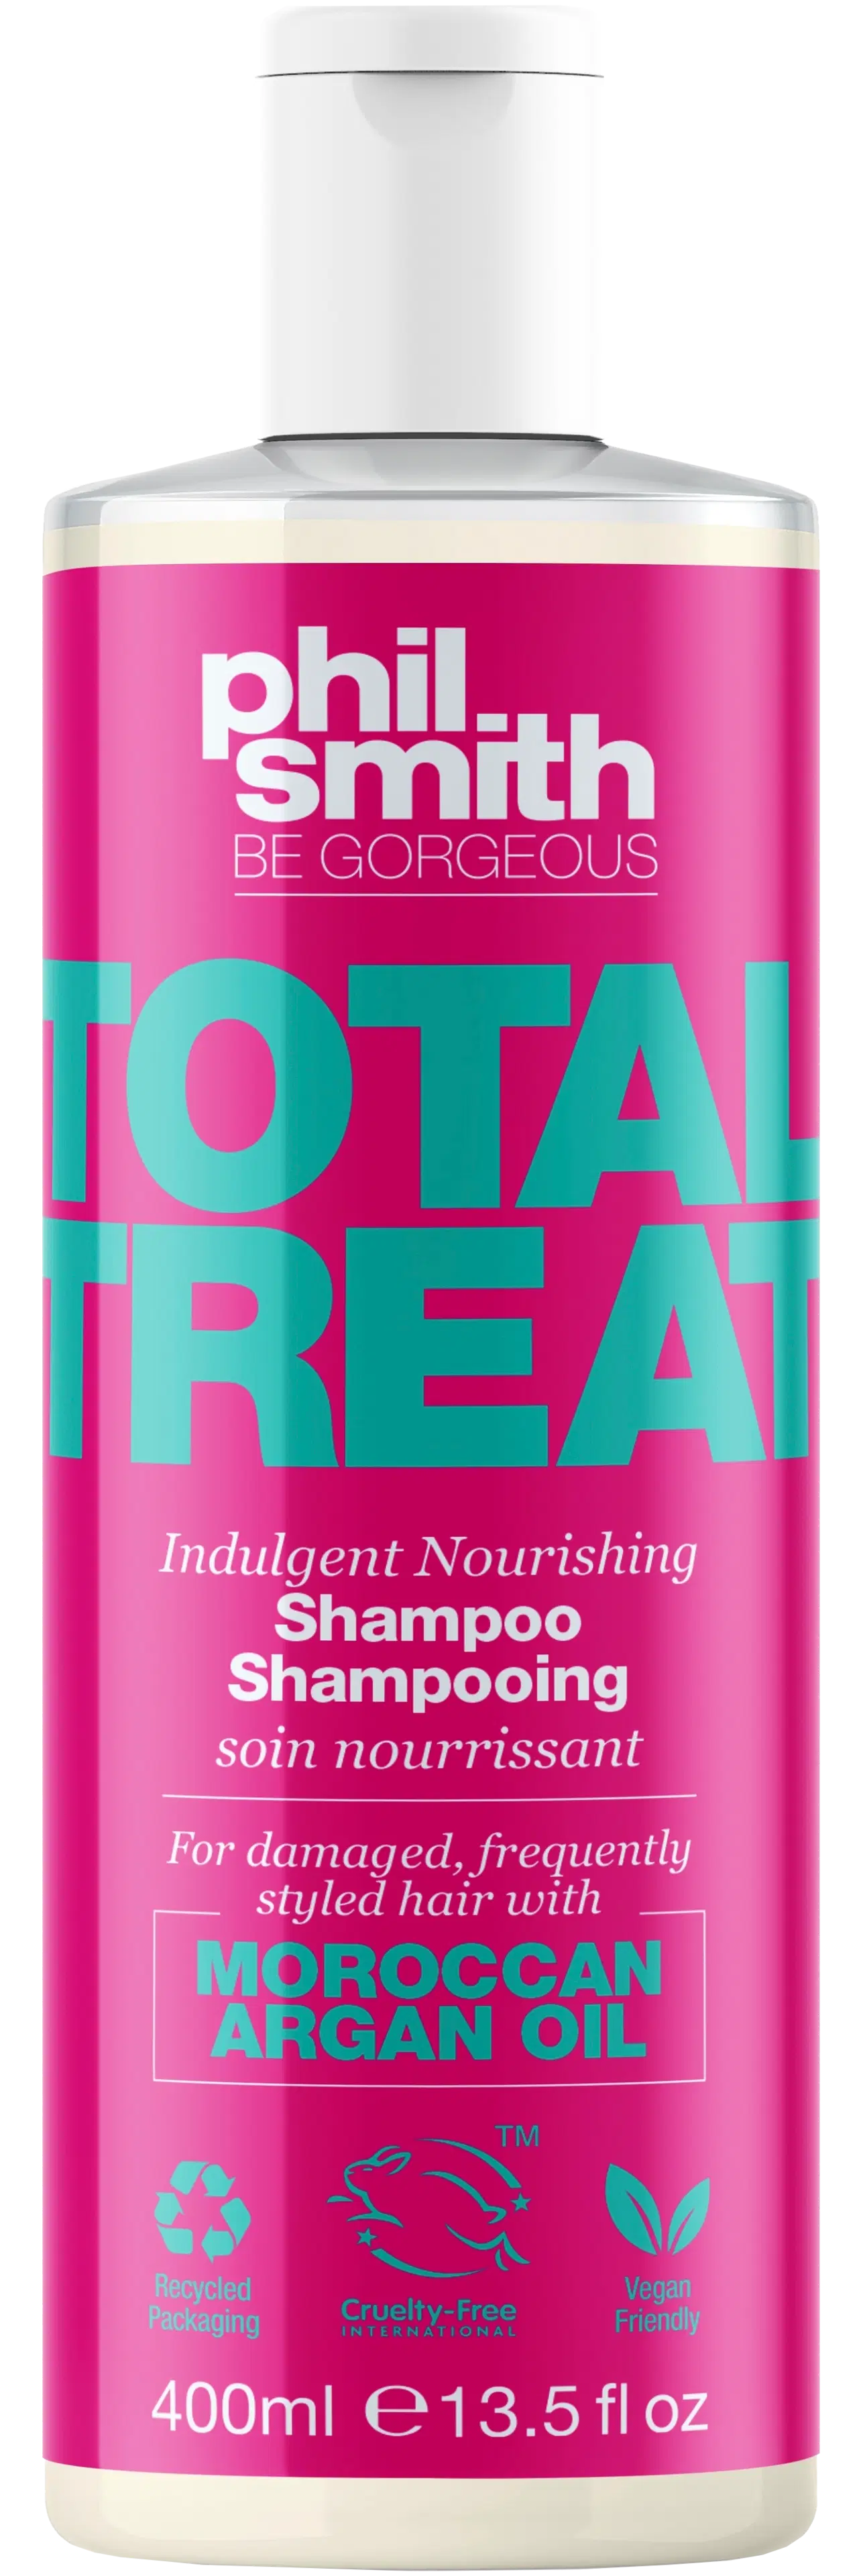 Phil Smith Be Gorgeous Total Treat Indulgent Nourishing Shampoo 400ml